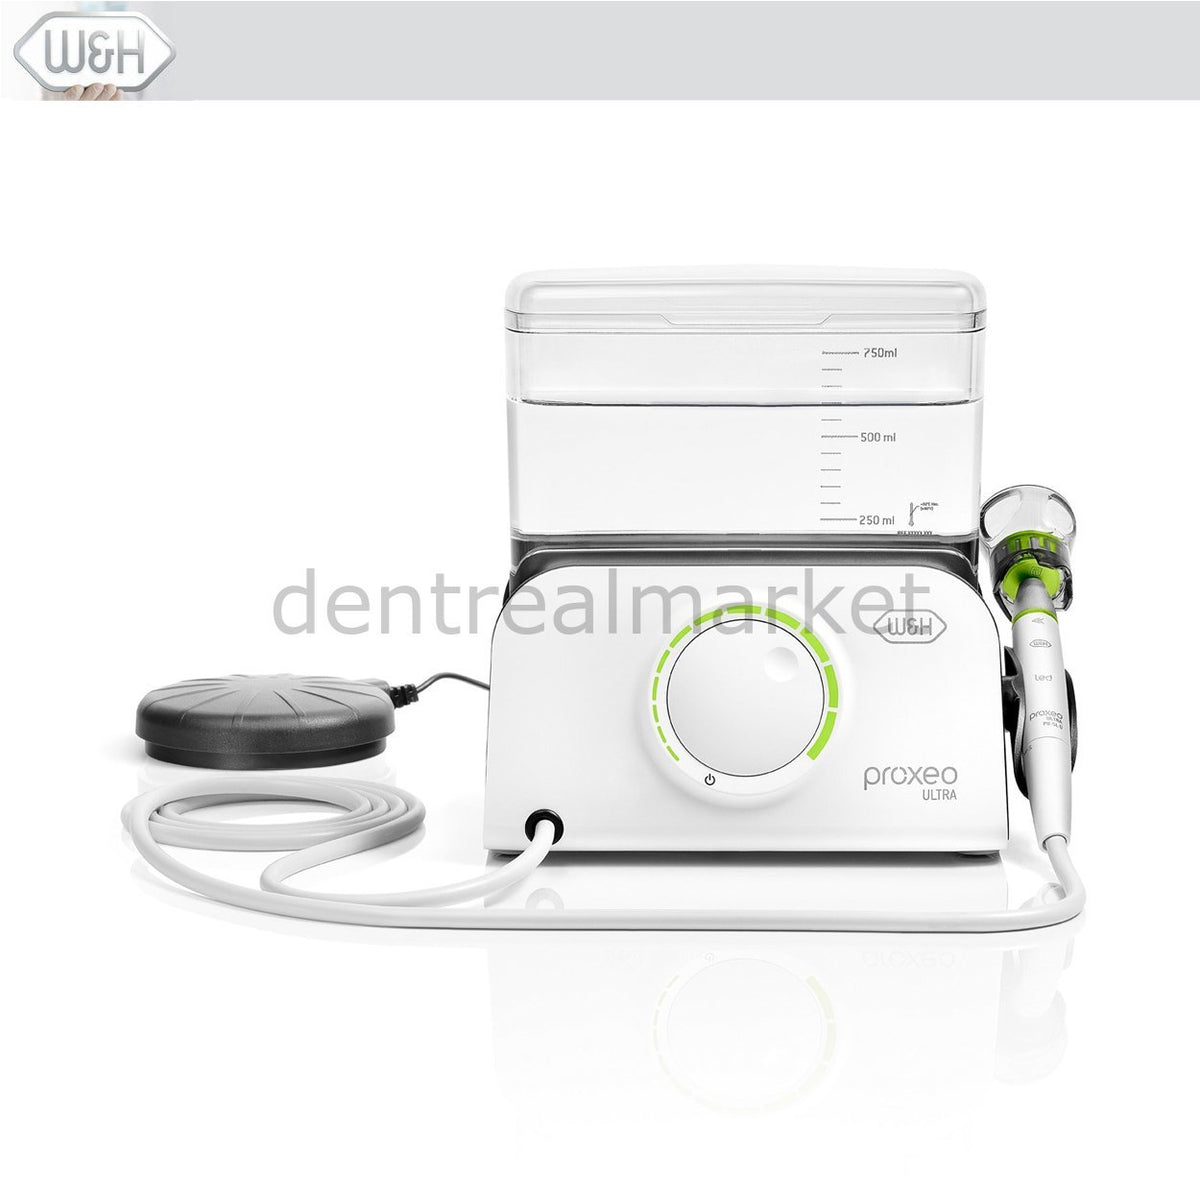 DentrealStore - W&H Dental Proxeo Piezo Scaler Illuminated Cavitron Device - PB-520